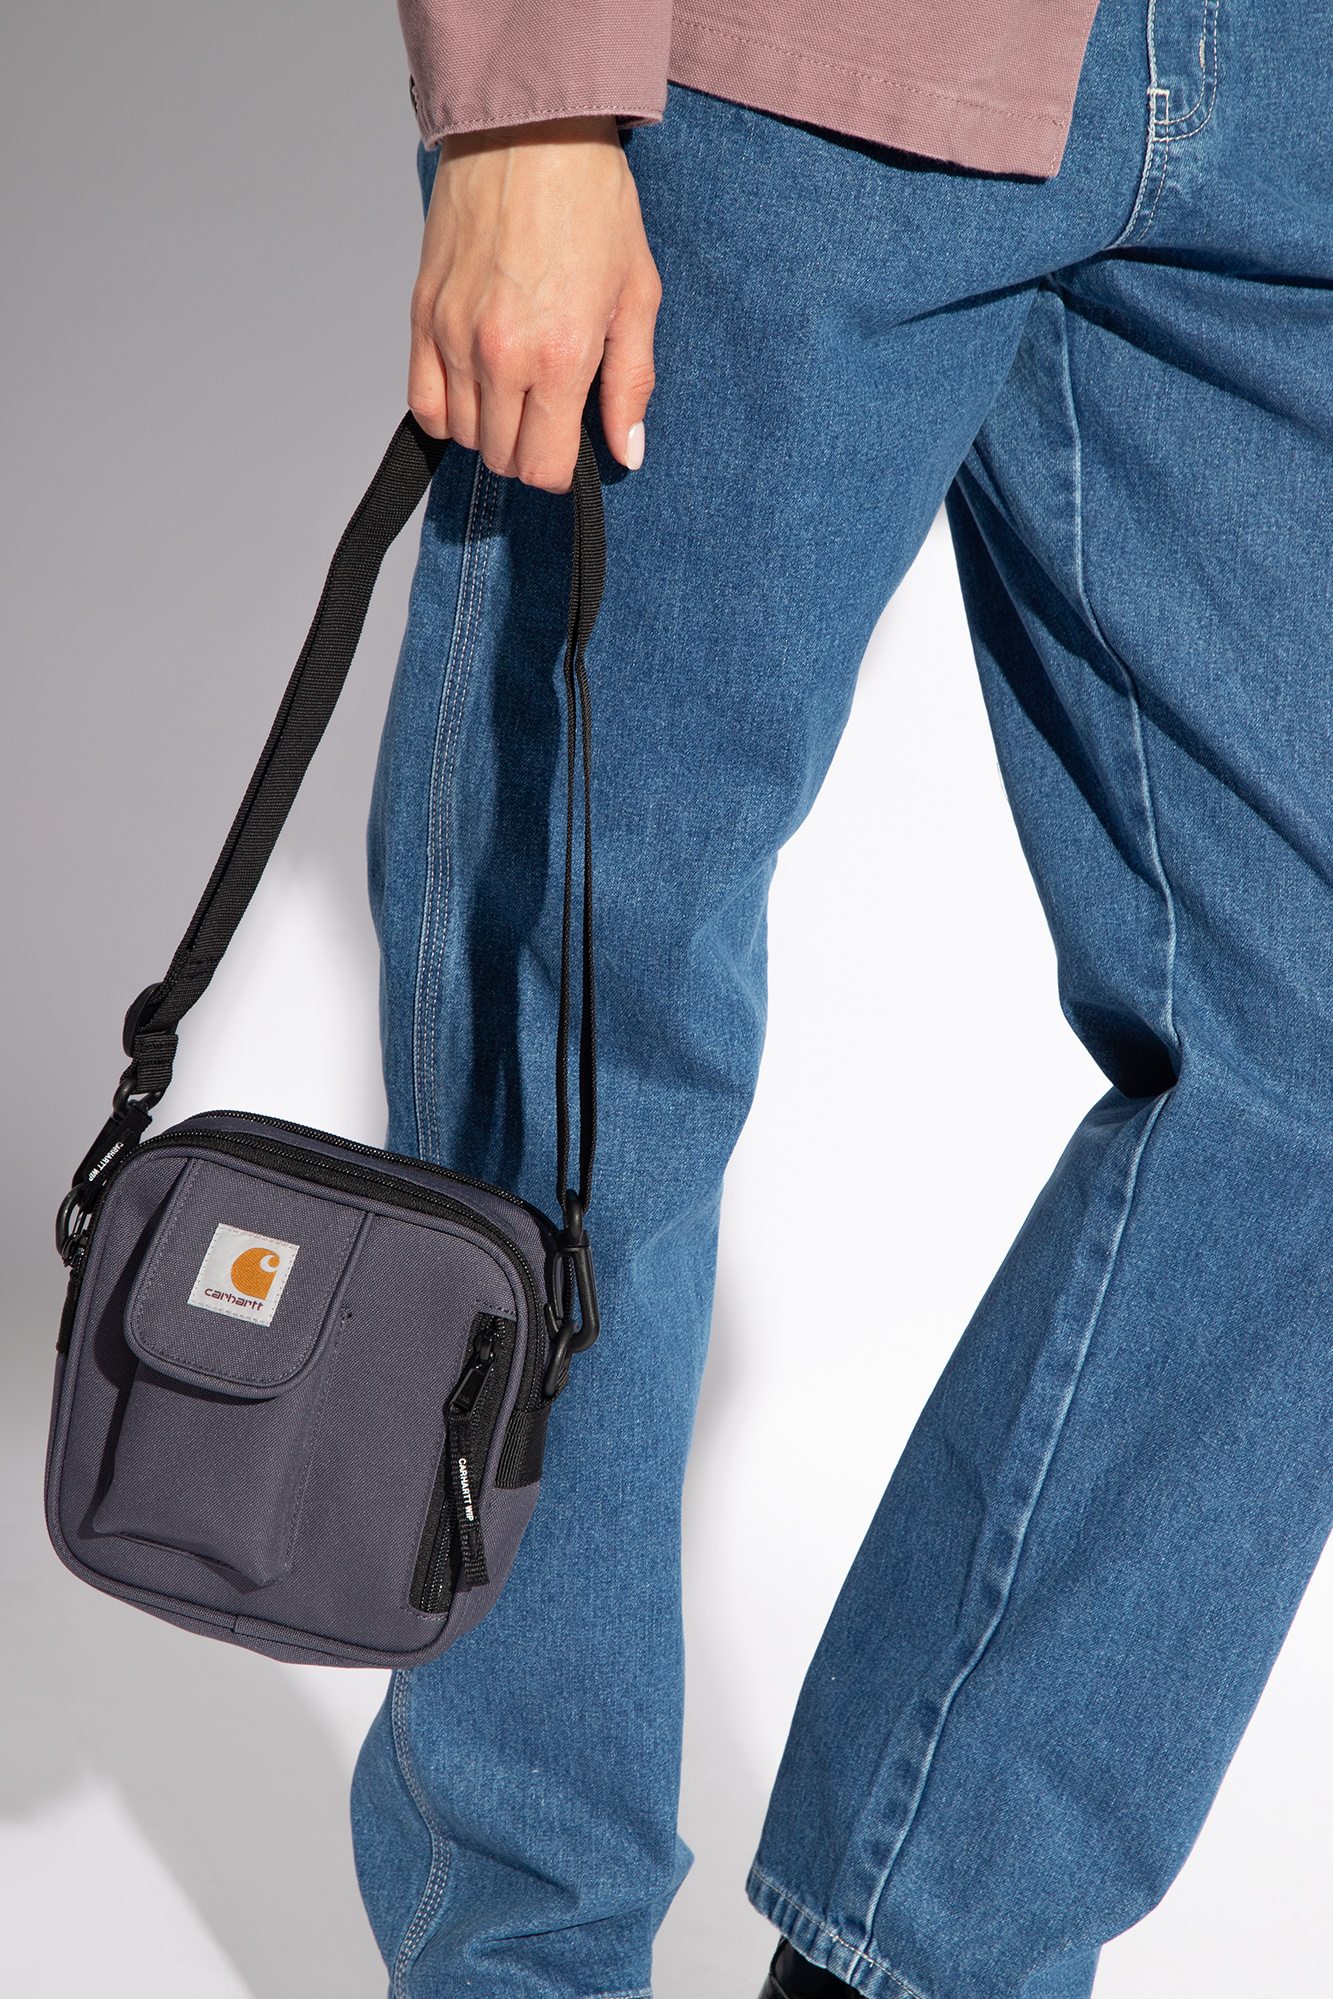 Grey Shoulder bag with logo Carhartt WIP - GenesinlifeShops France